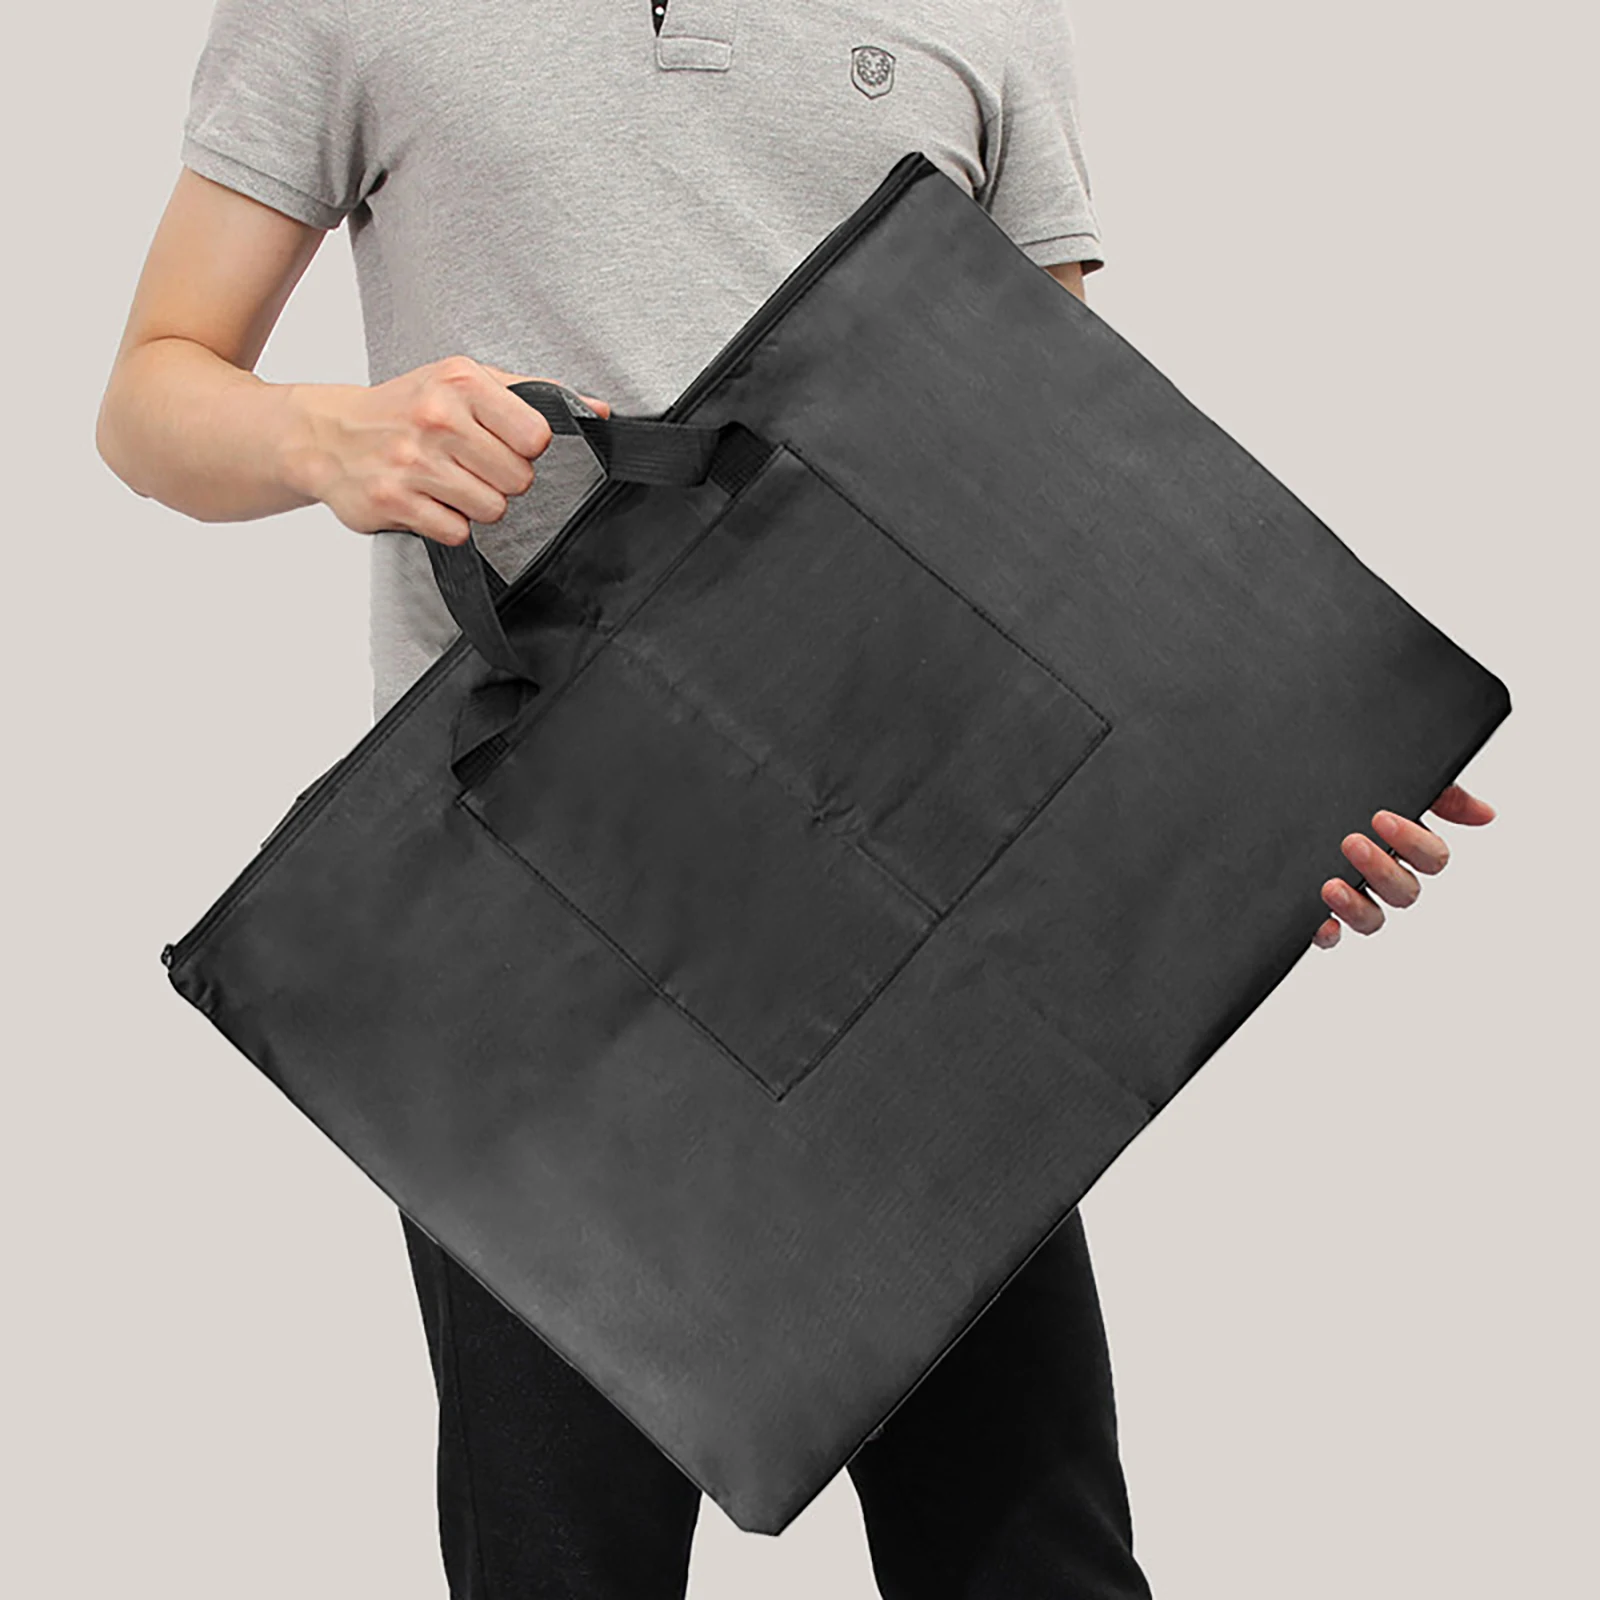 Canvas Art Portfolio Carry Bag Large Size A2 Artist Portfolio Case Drawing Board Bag Lightweight Poster Board Storage Bag Artwork Drawing Painting